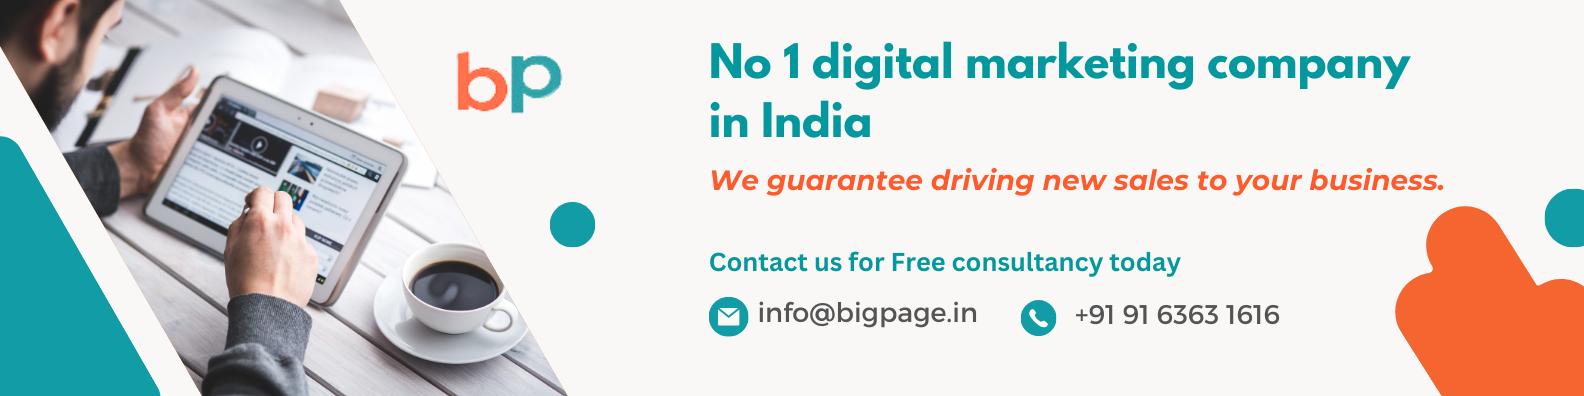 No 1 digital marketing company in india